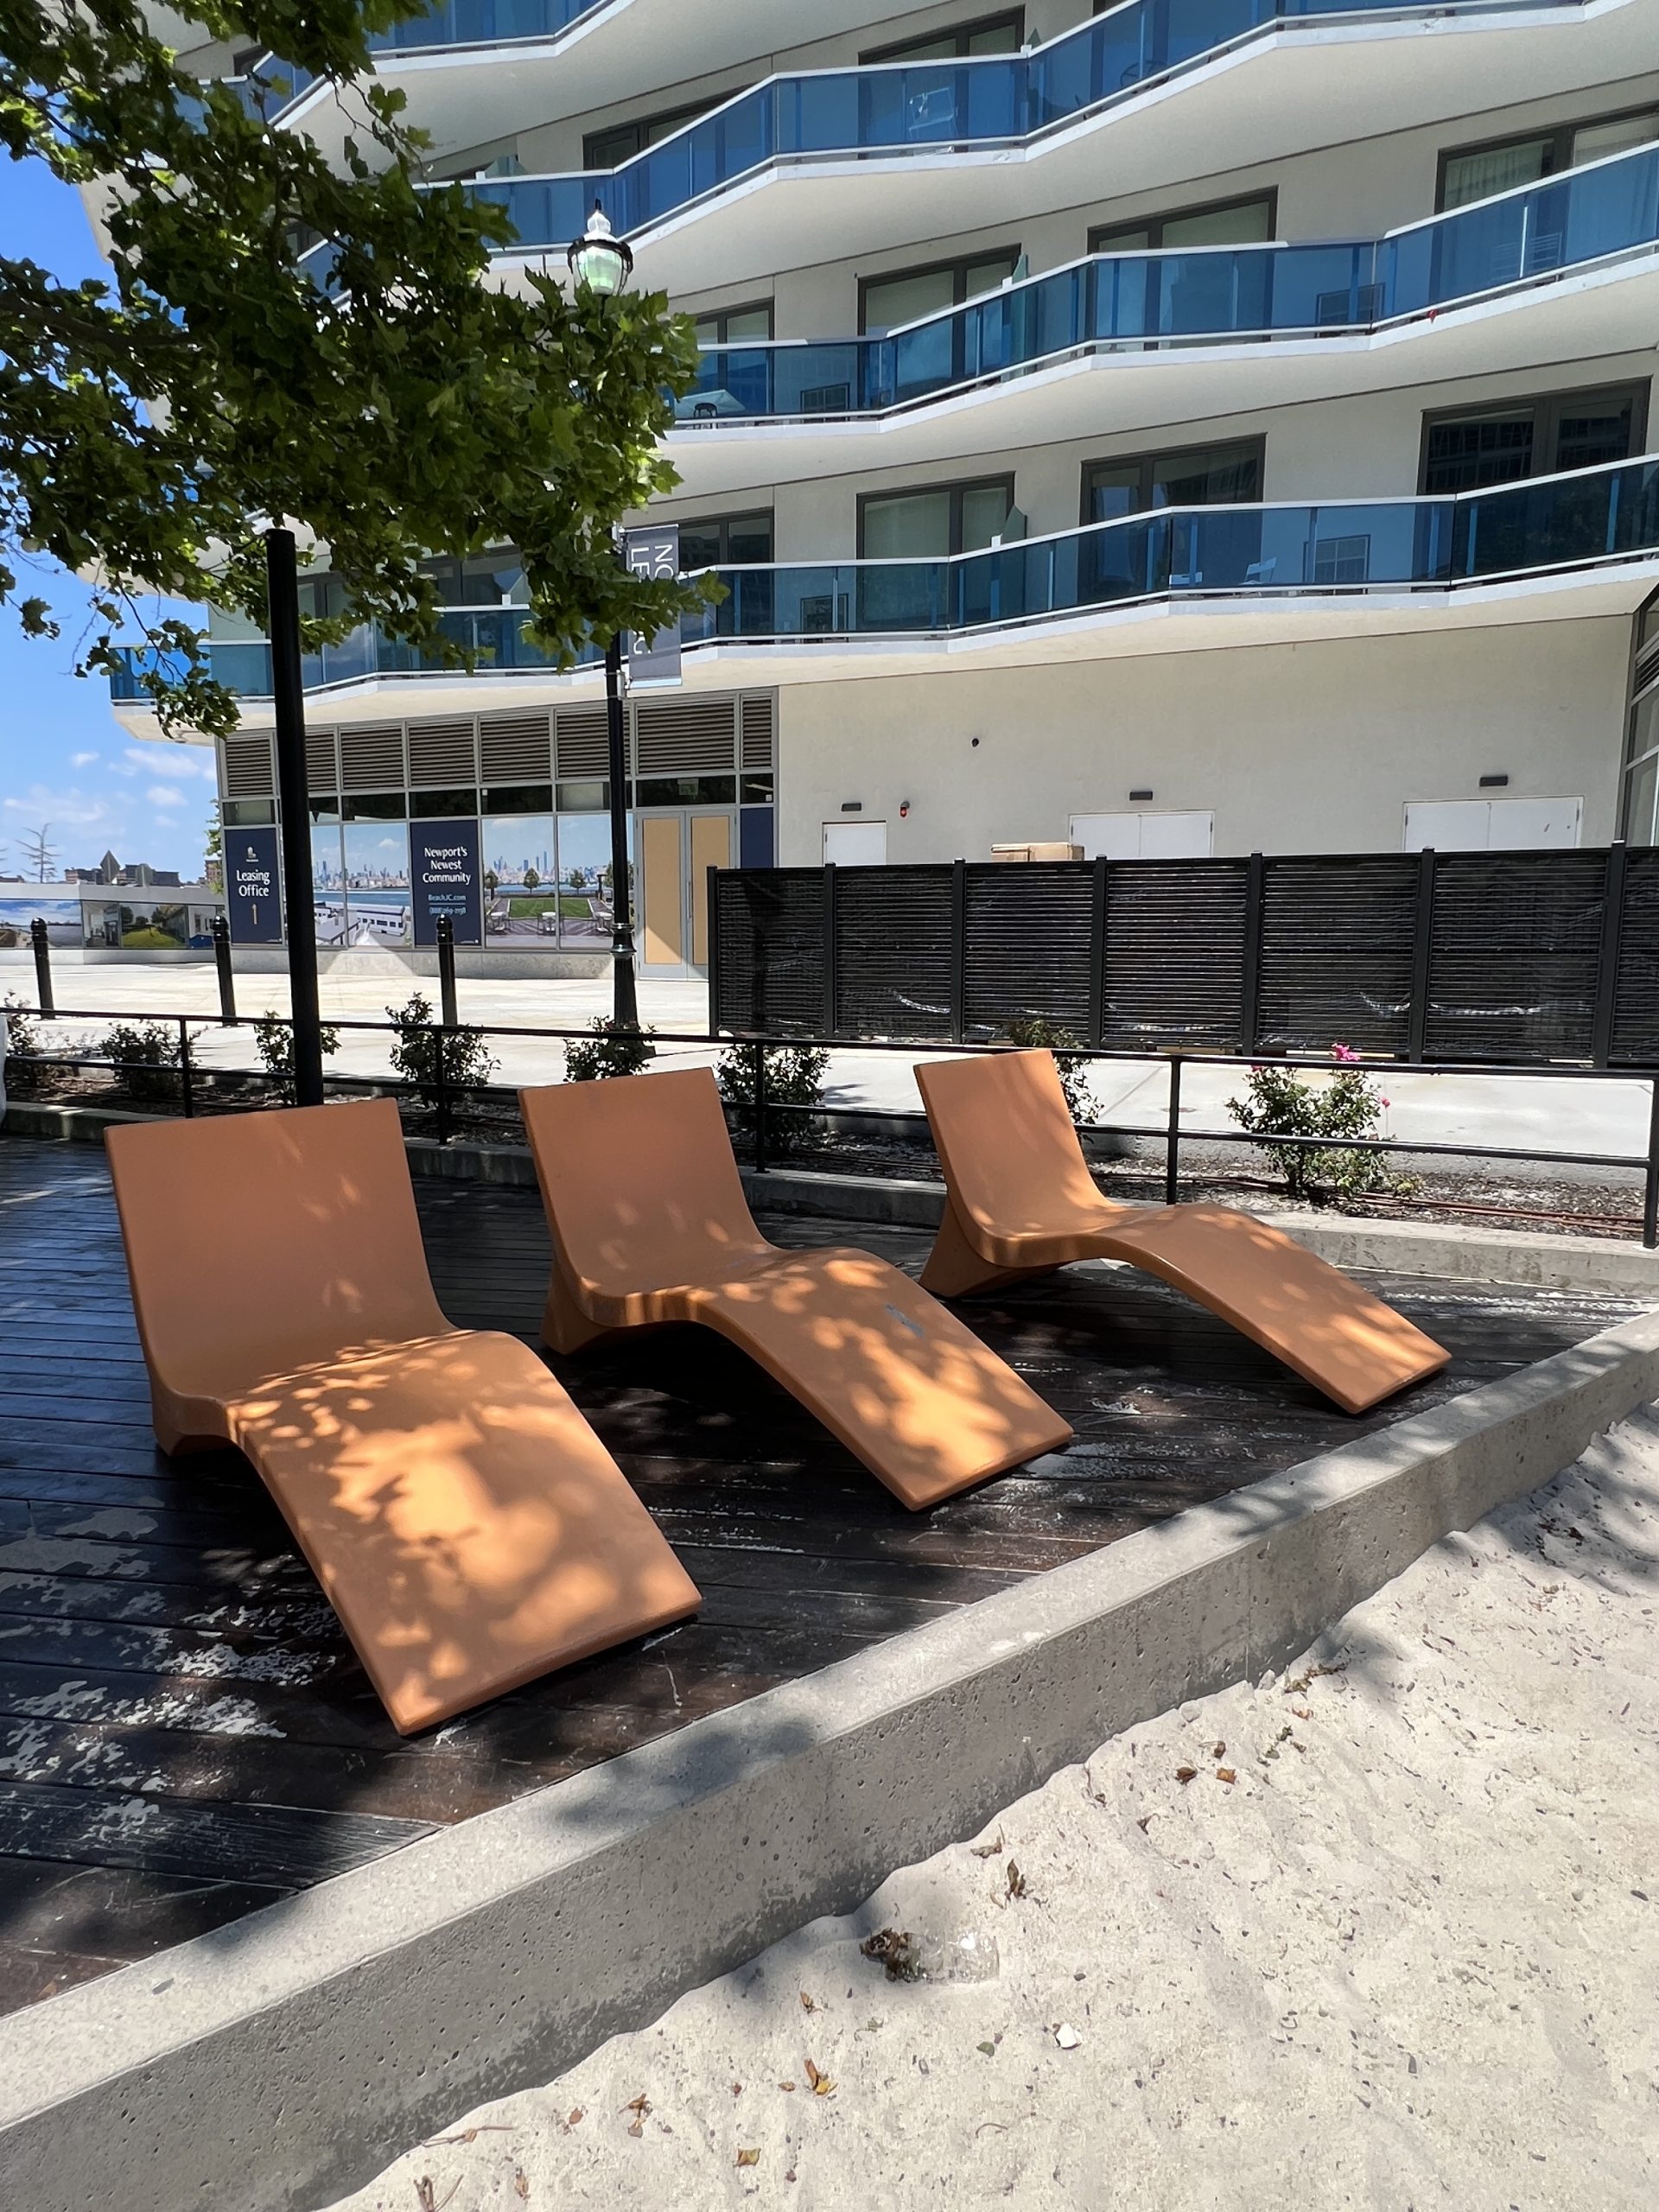 Newport Green Park in Jersey City NJ - Beach chairs on boardwalk TALL